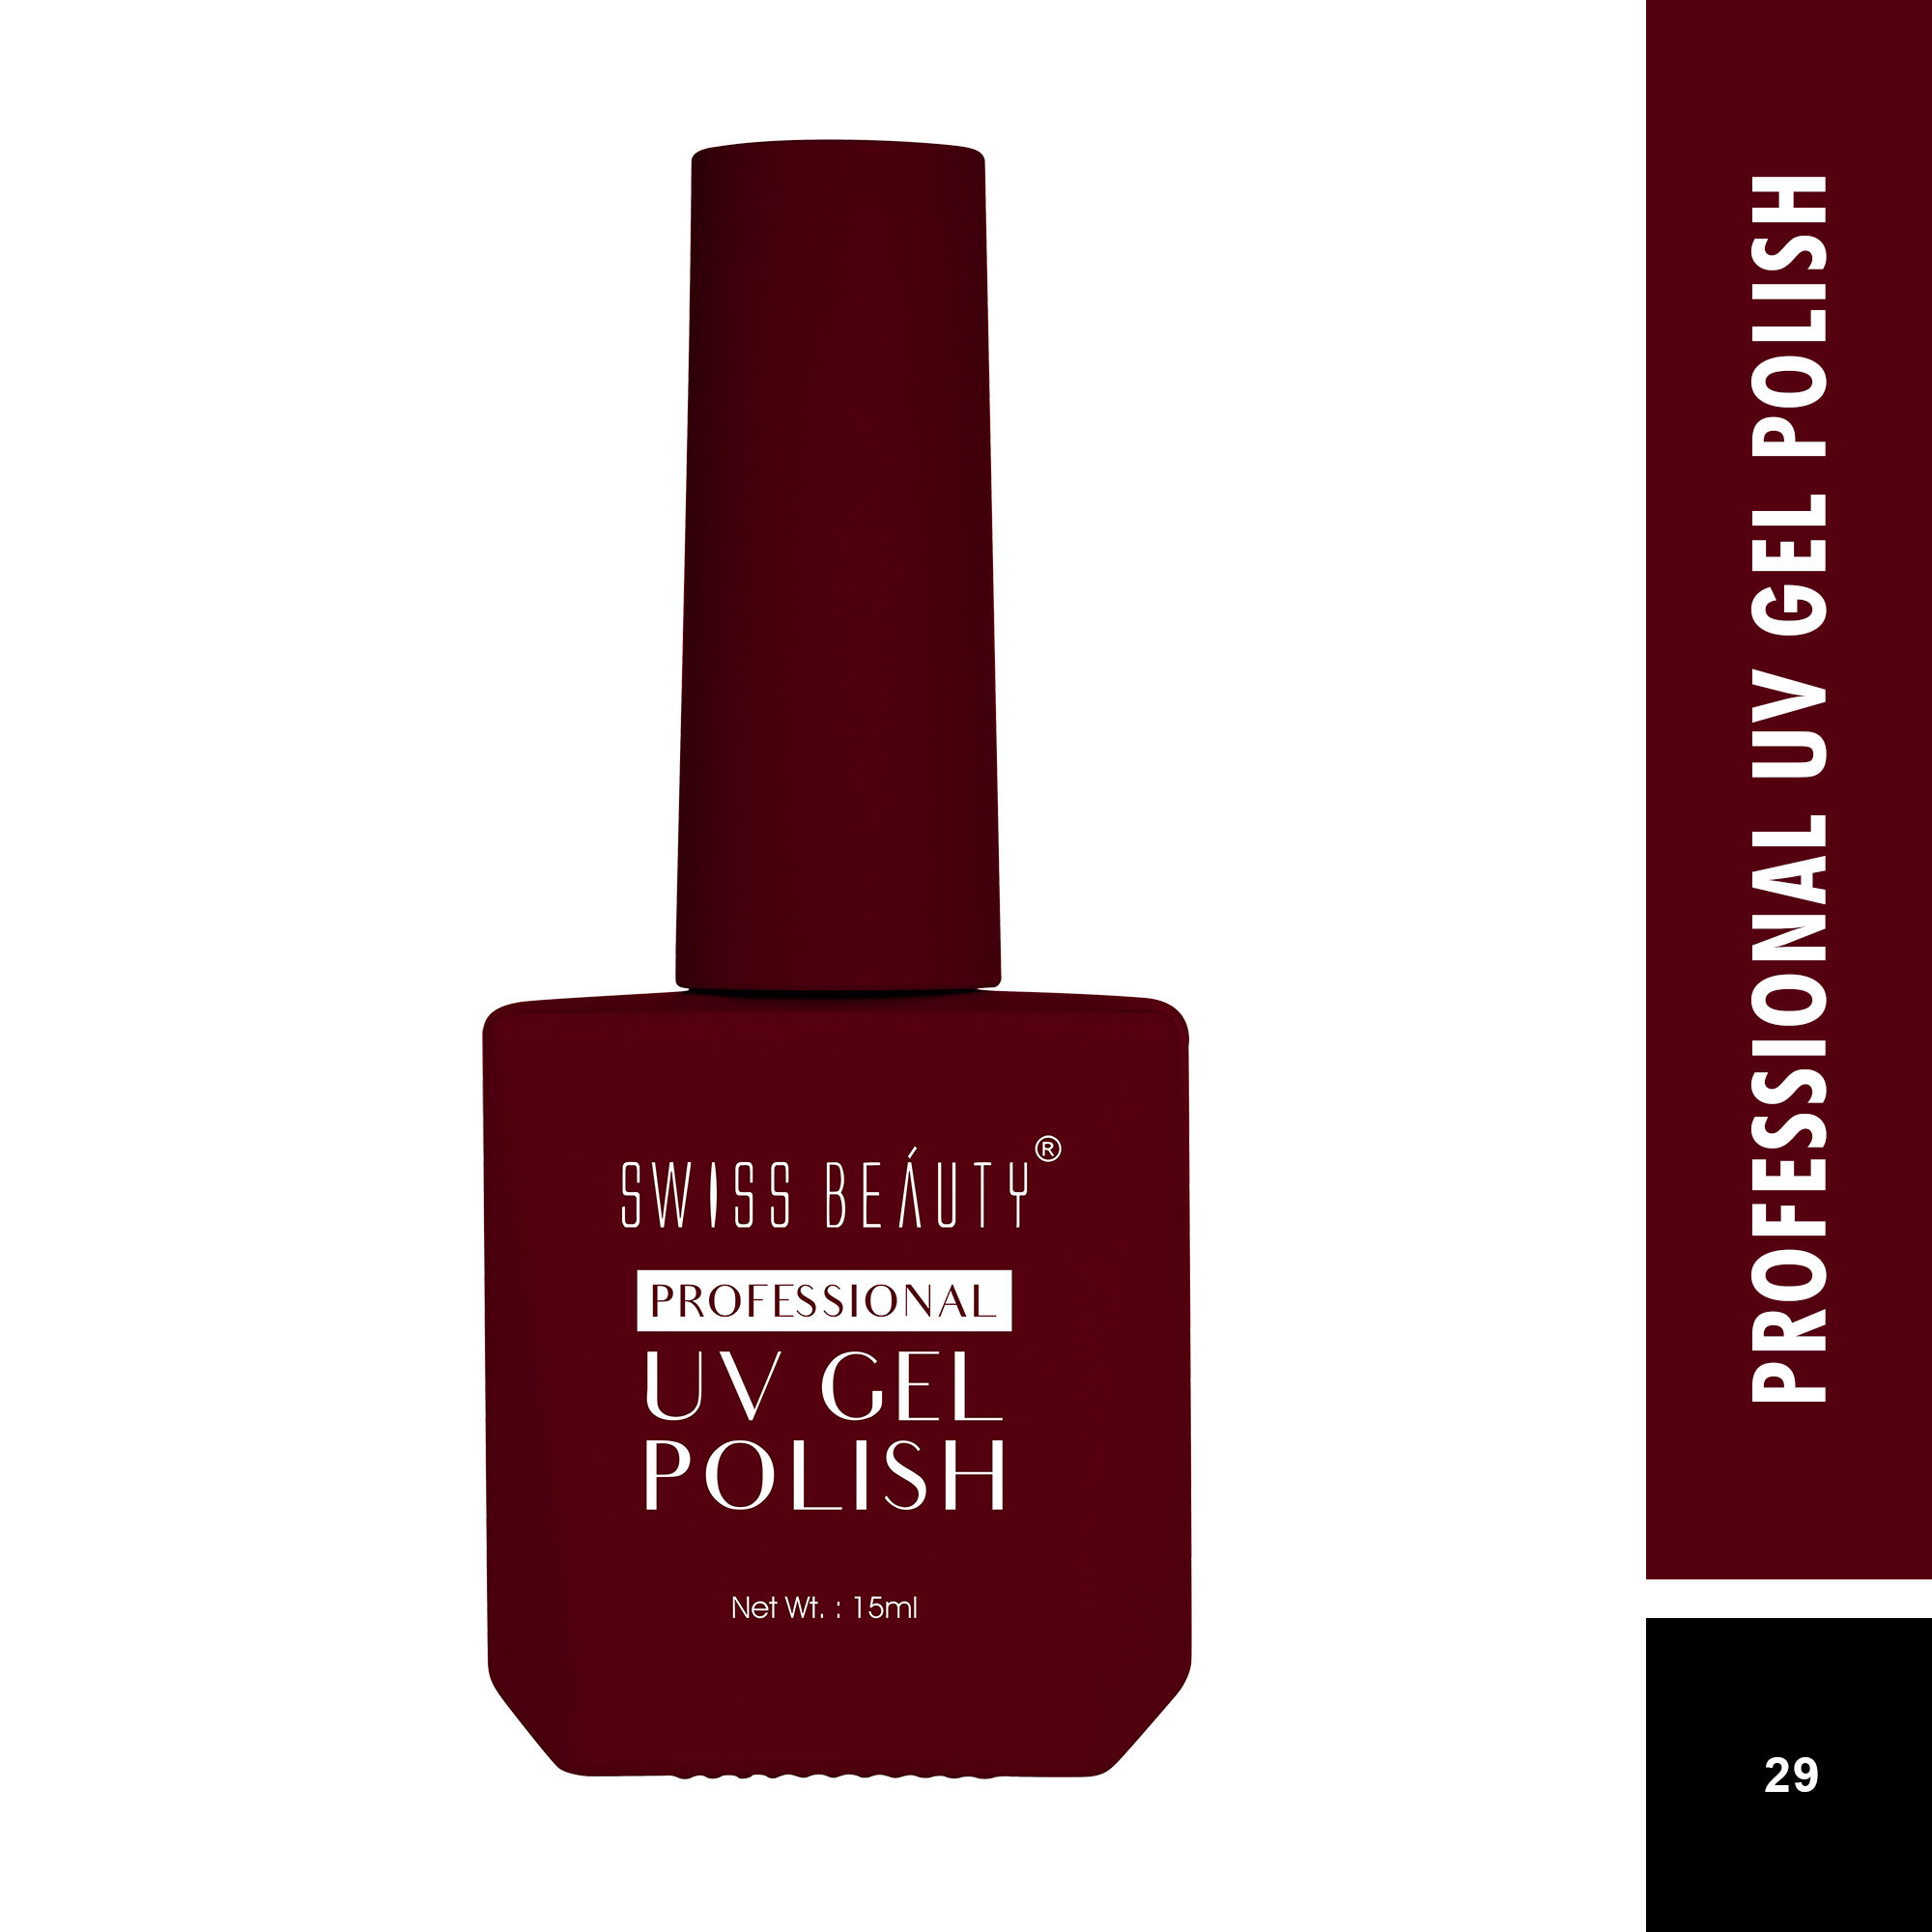 Gel Polish vs Regular Nail Polish: Which Should You Choose? - The Summer  Study